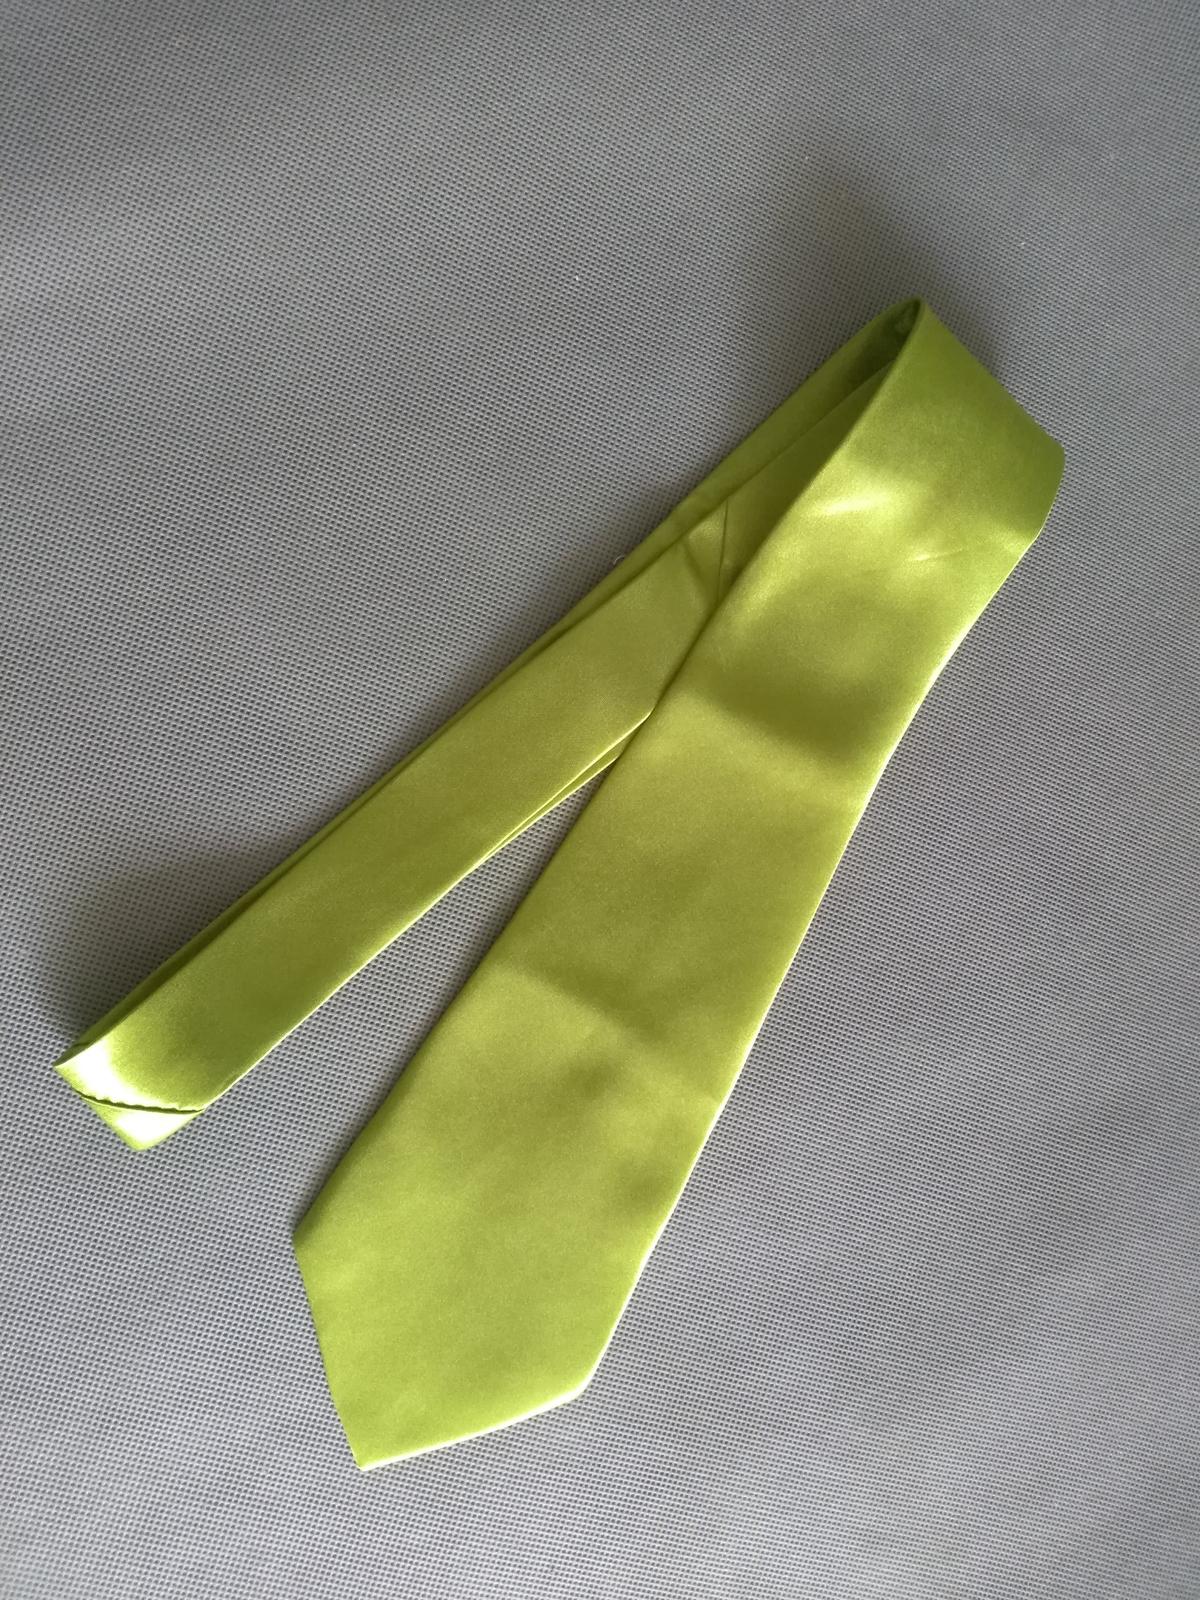 SKLADEM - zelená kravata - Obrázek č. 1